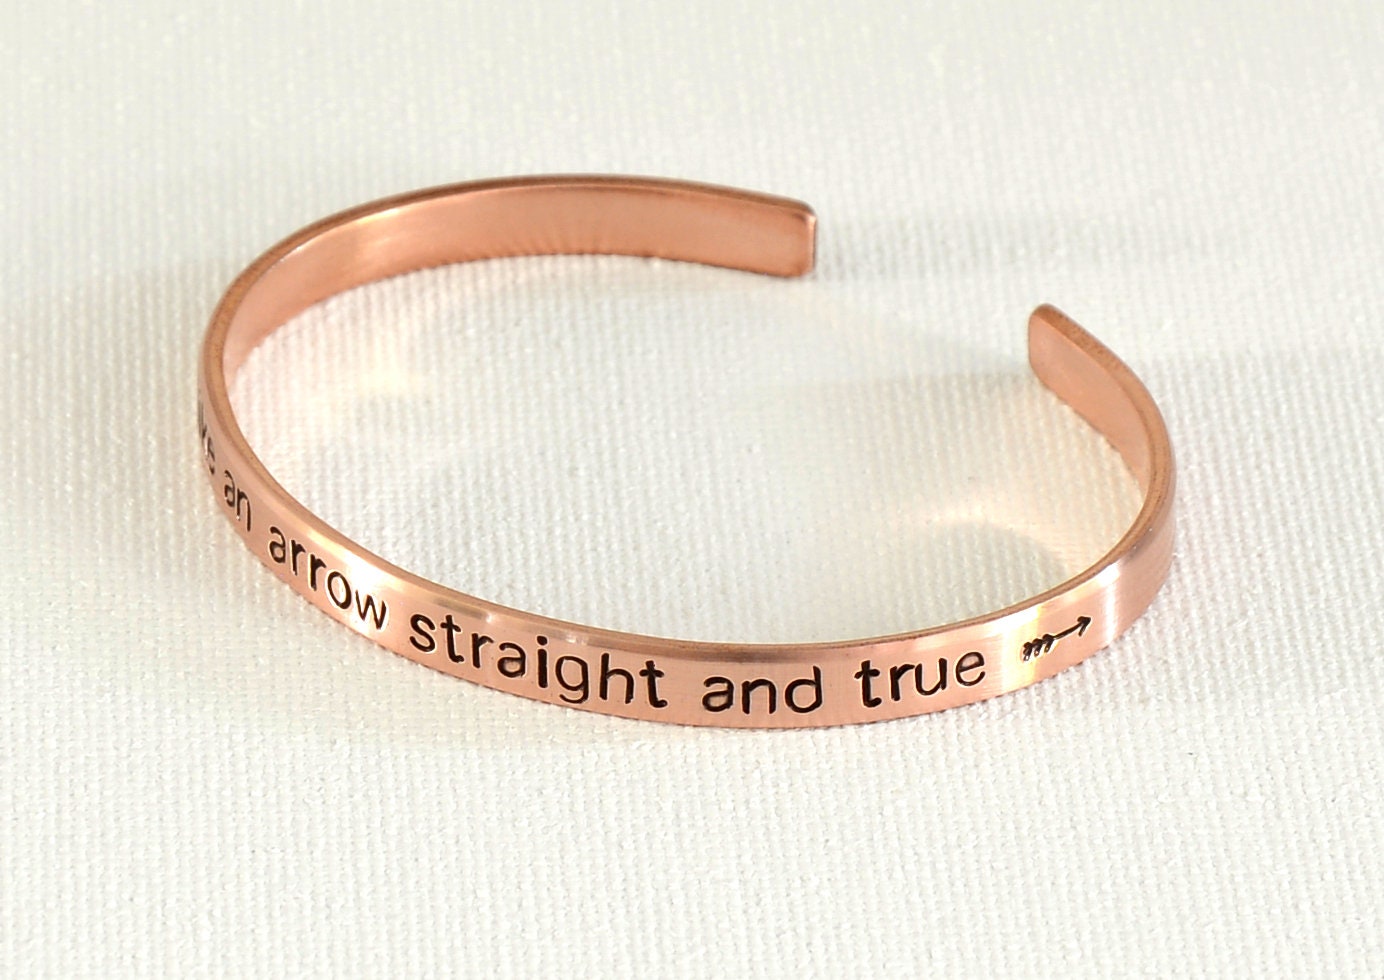 Fly like an arrow straight and true copper bracelet